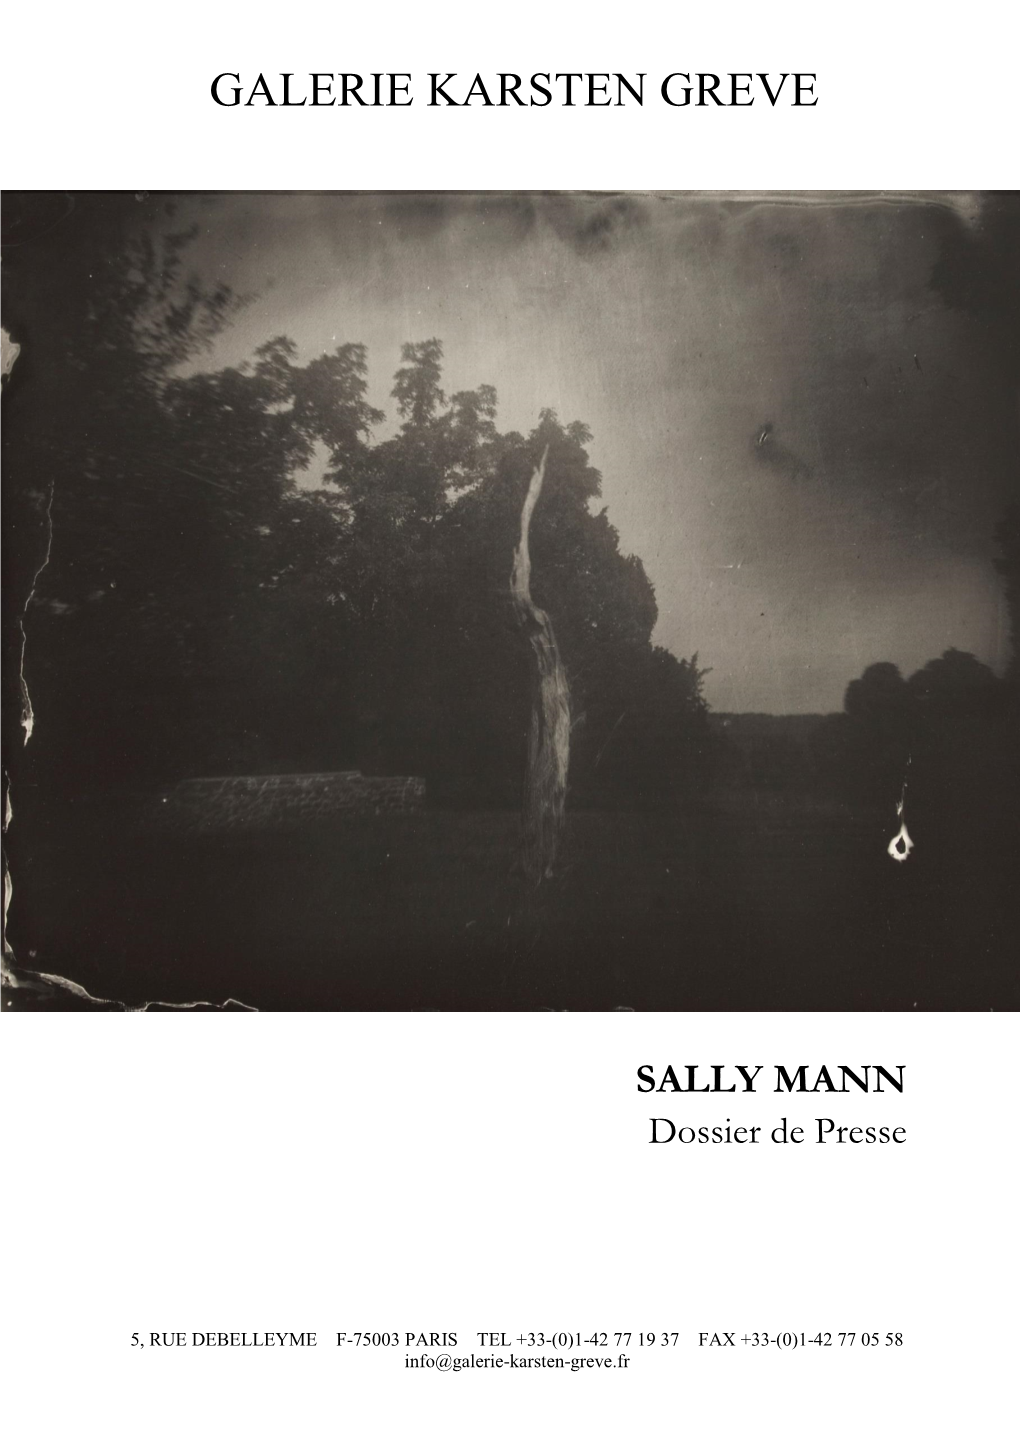 SALLY MANN Dossier De Presse